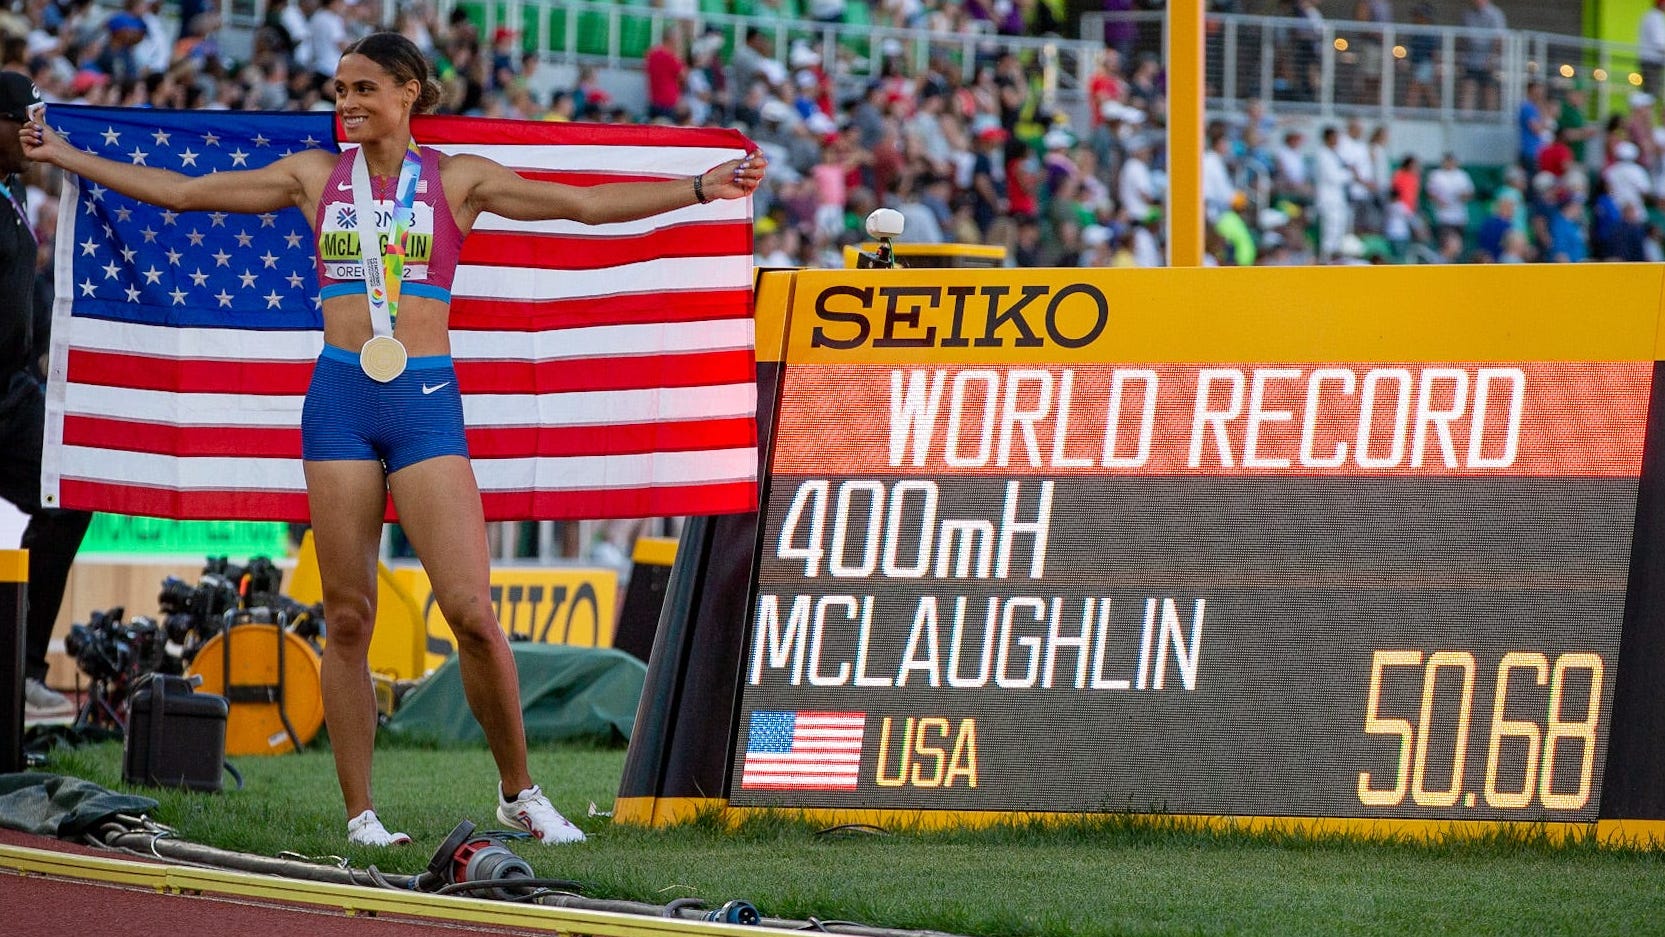 Sydney McLaughlin breaks her own world record in 400 hurdles